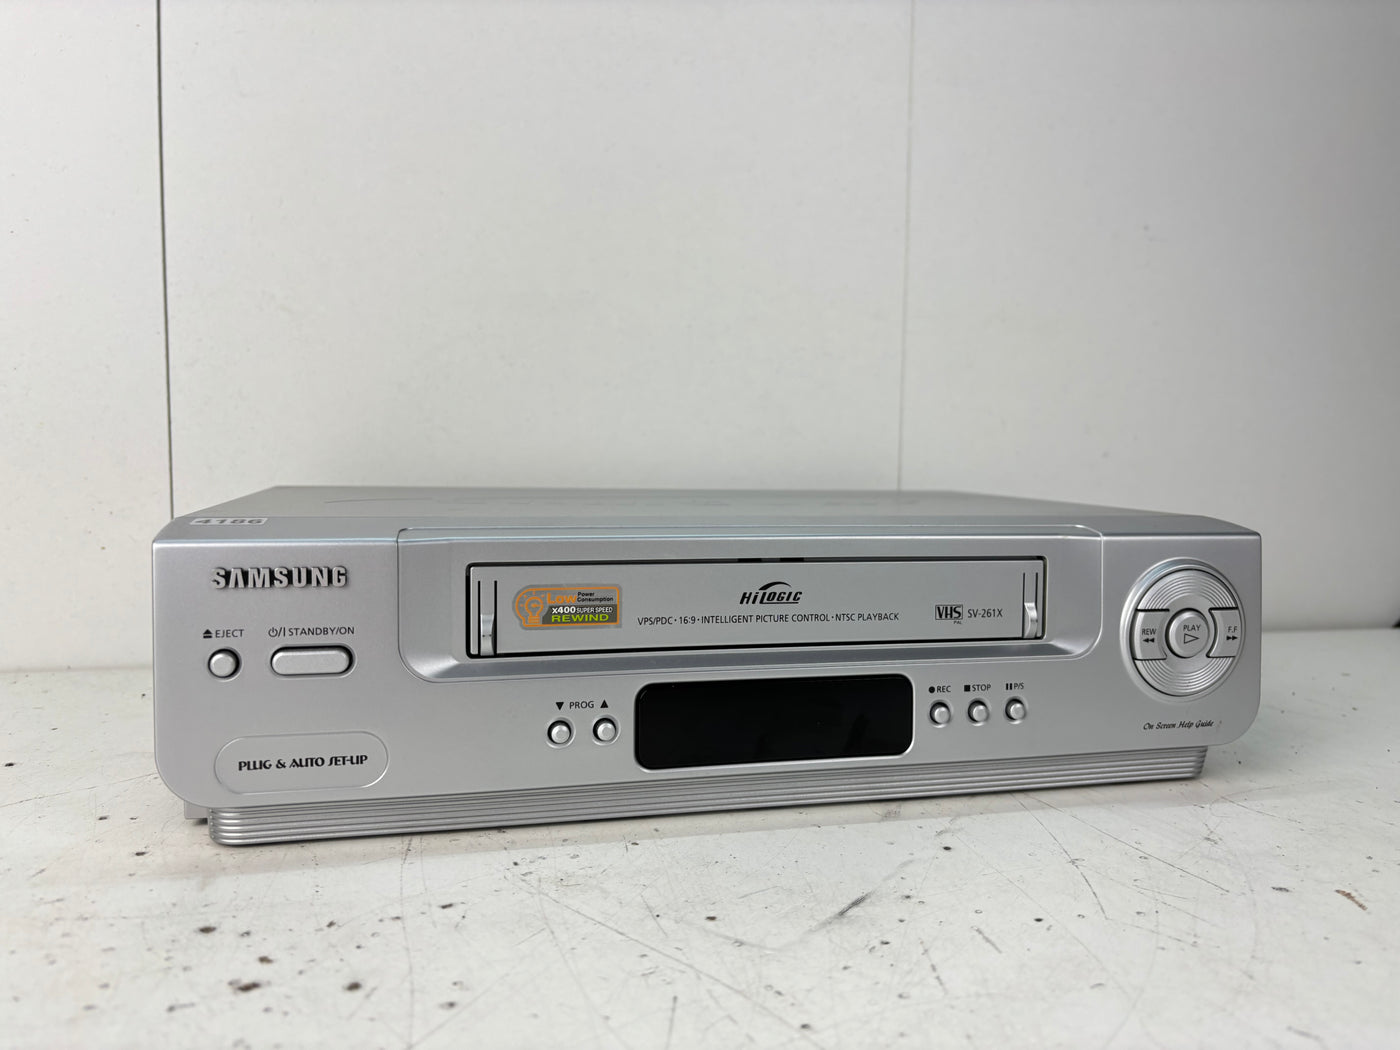 Samsung SV-261X VHS Videospeler